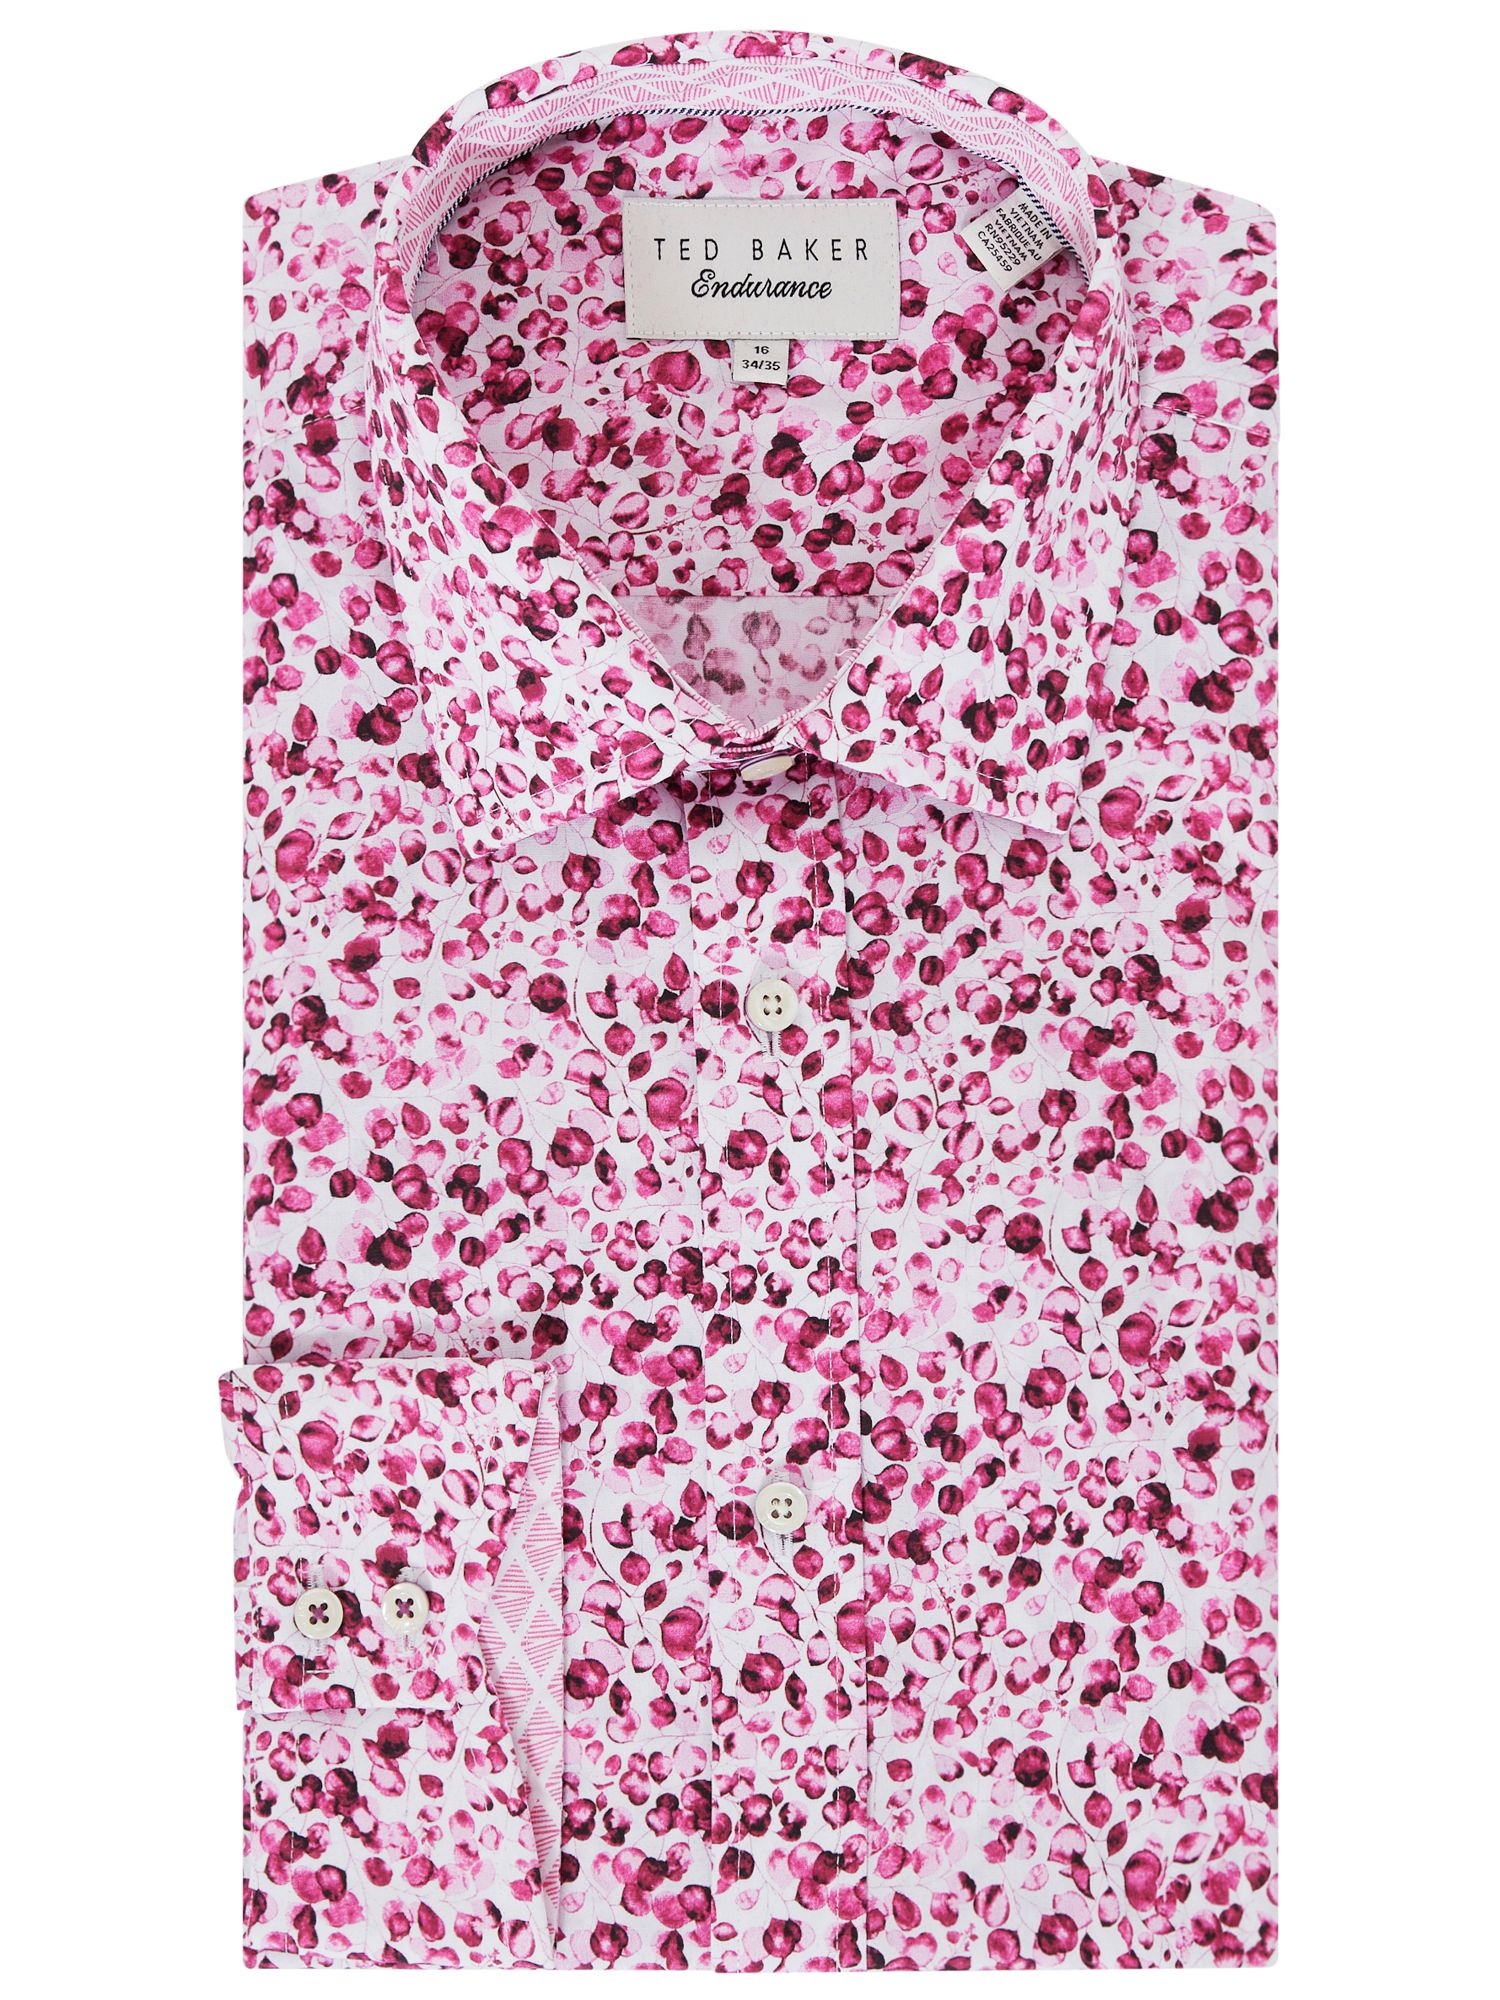 pink floral shirt mens